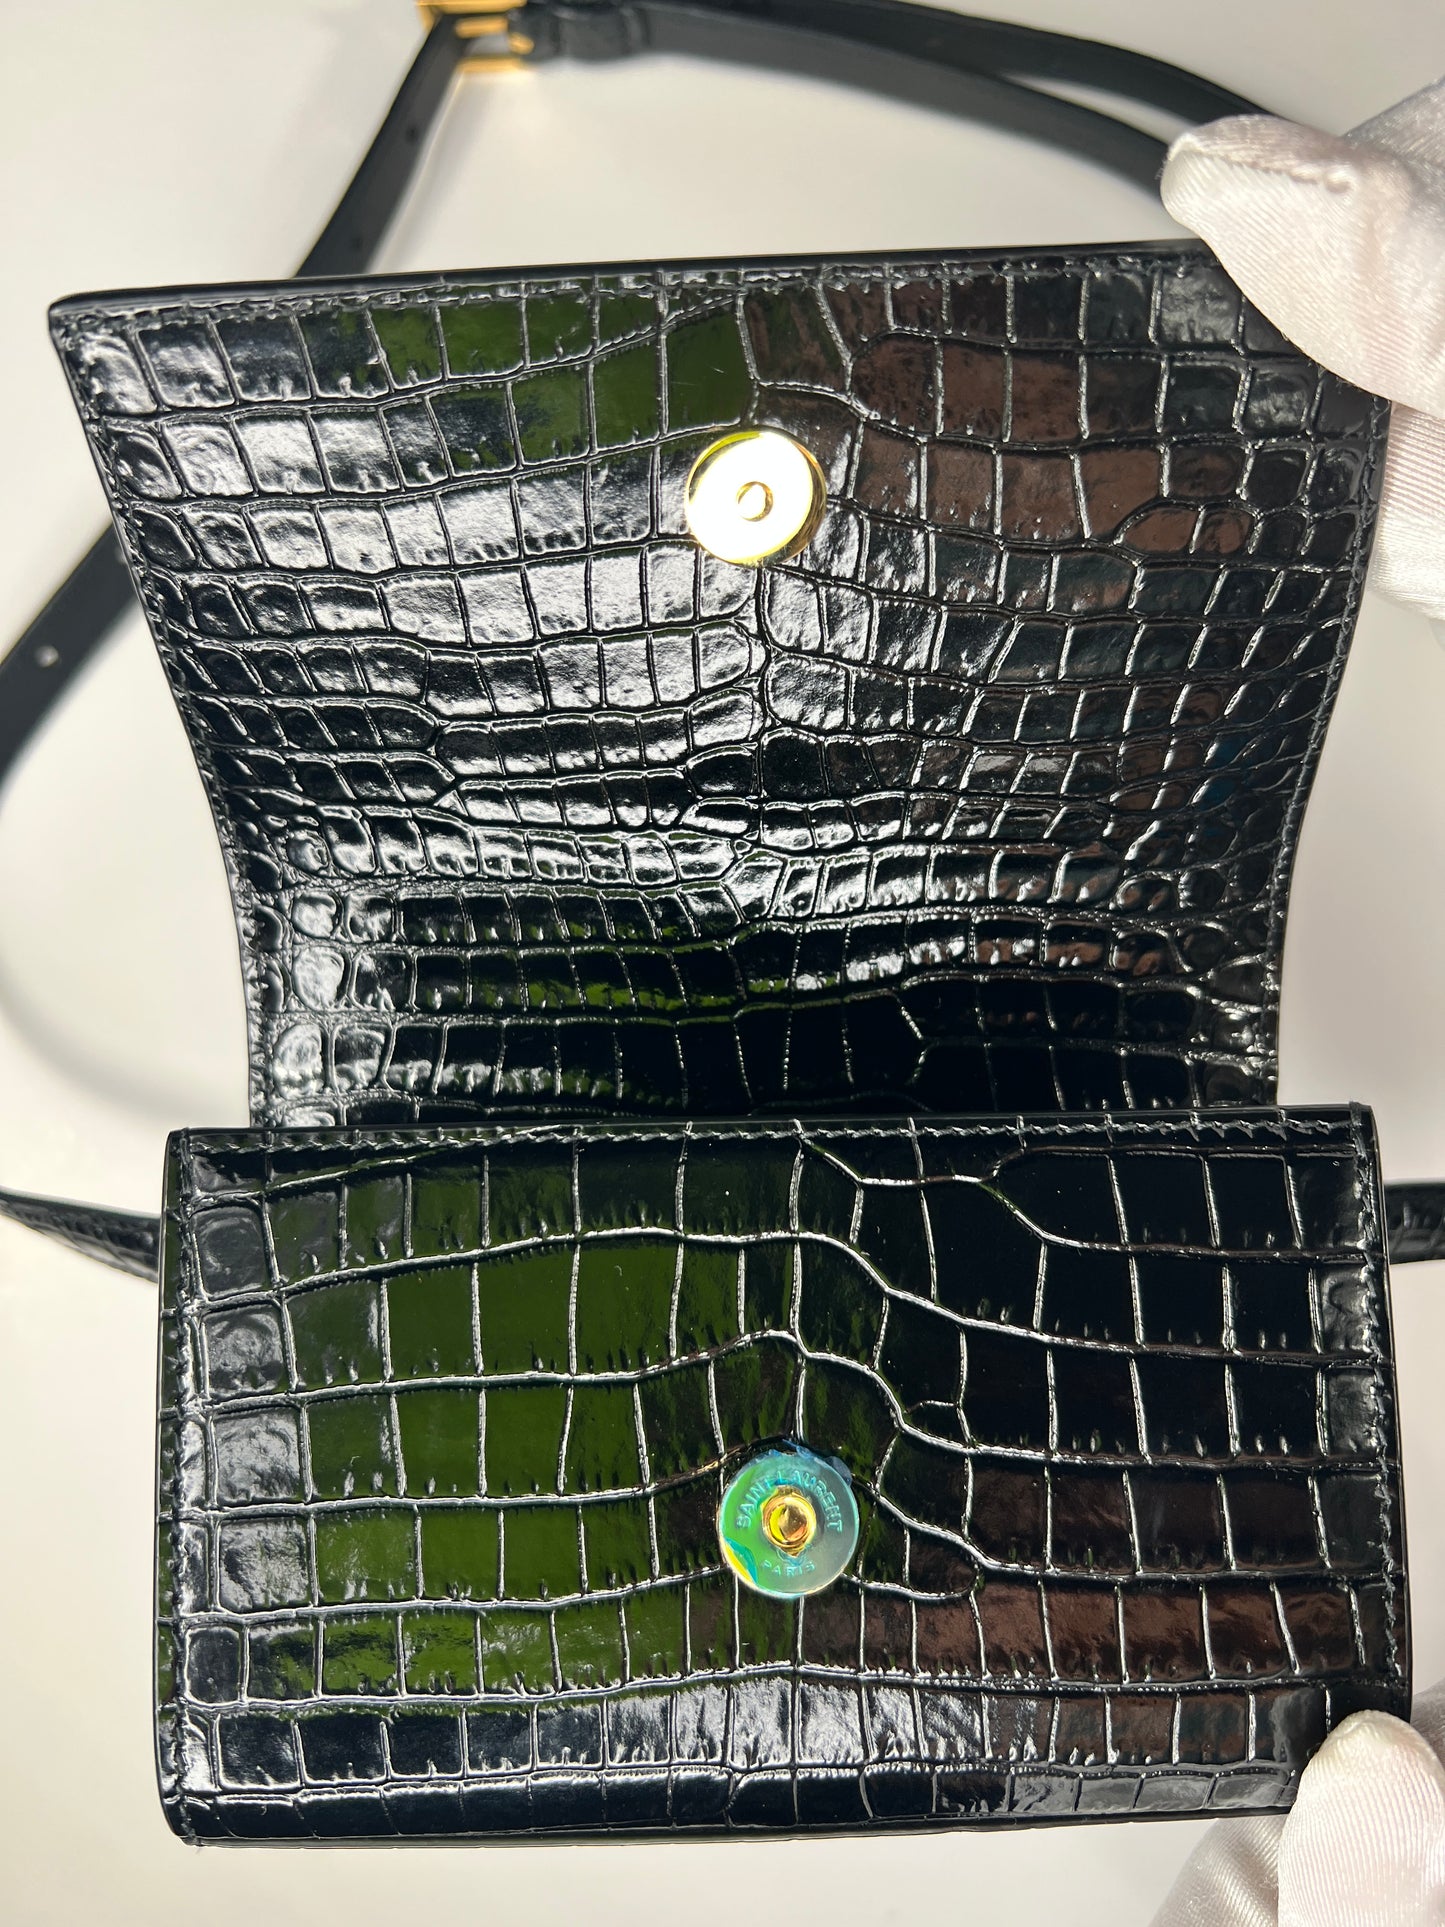 Saint Laurent Kate Croc Embossed Leather Belt Bag in Black